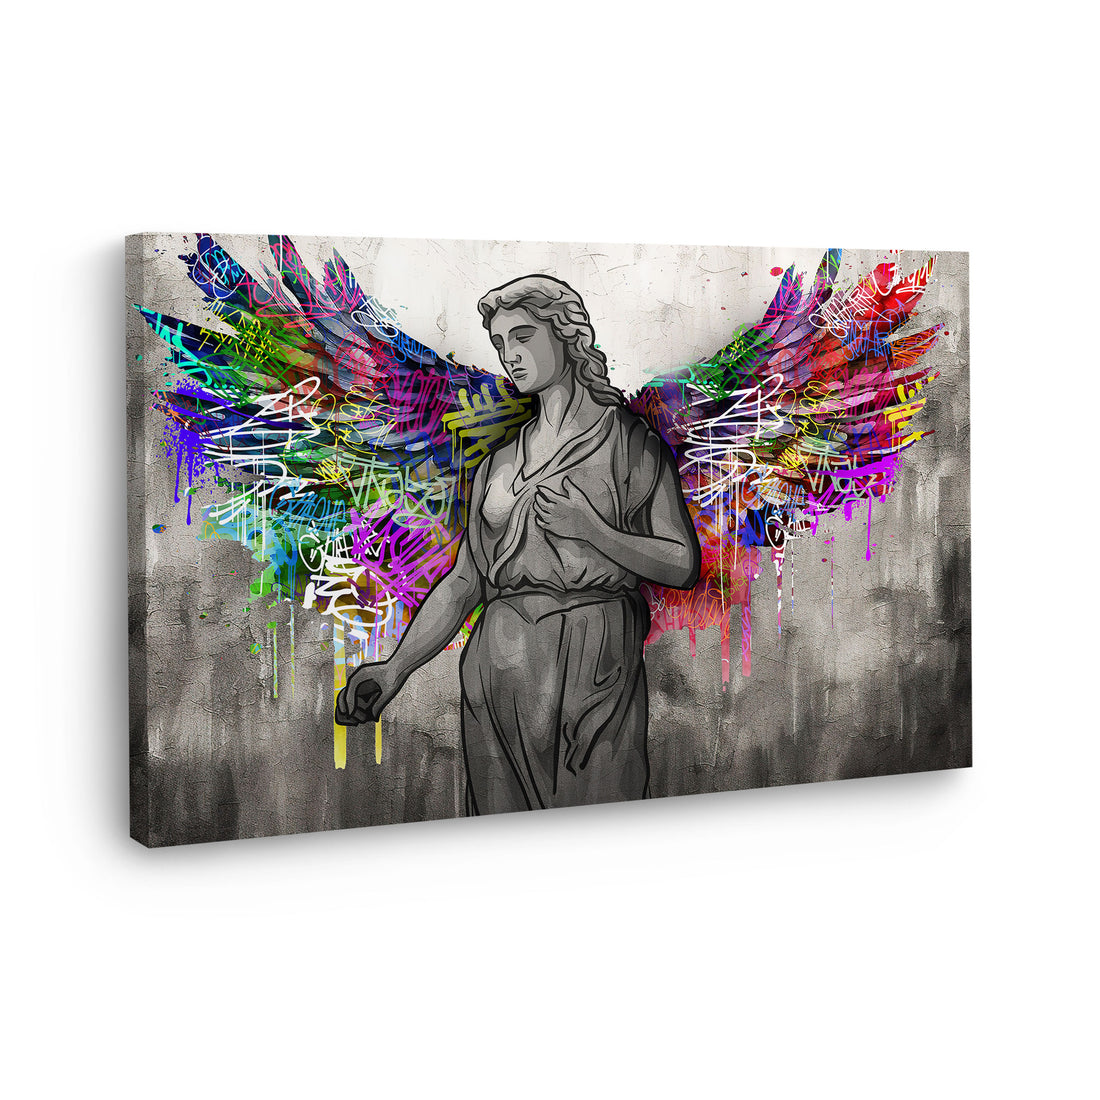 Wandbild Graffiti Street Art Engel mit Flügeln